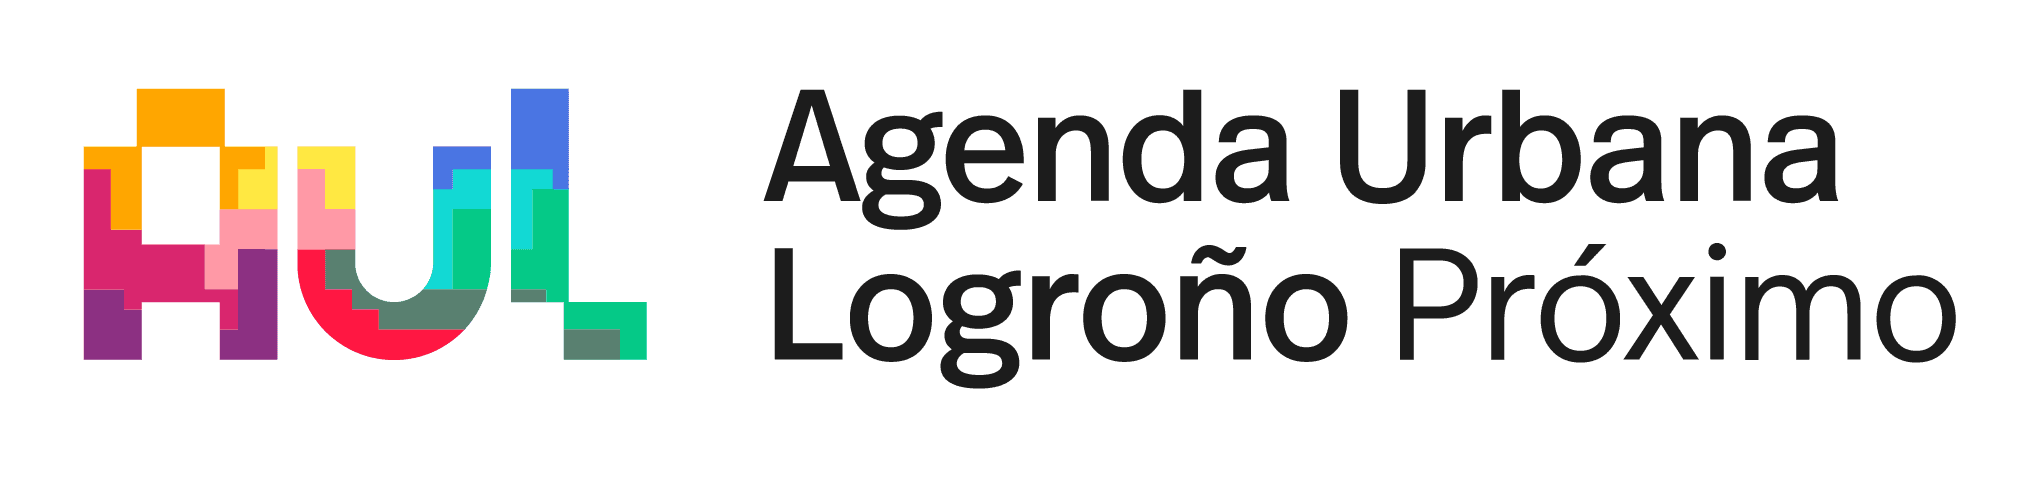 Agenda Urbana de Logroño